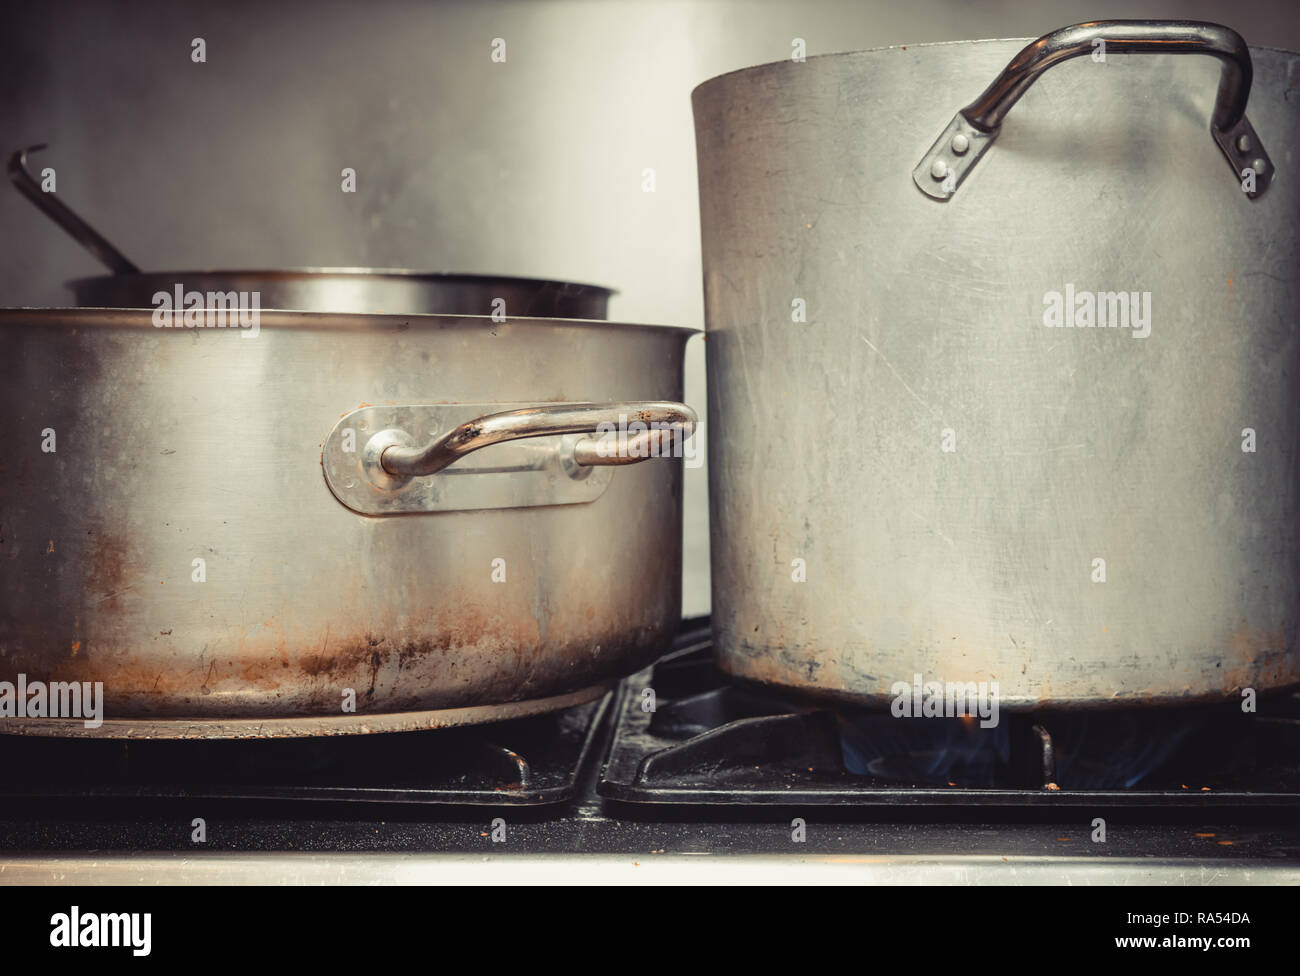 https://c8.alamy.com/comp/RA54DA/close-up-on-big-pot-and-saucepan-on-gas-stove-cooking-in-kitchen-RA54DA.jpg